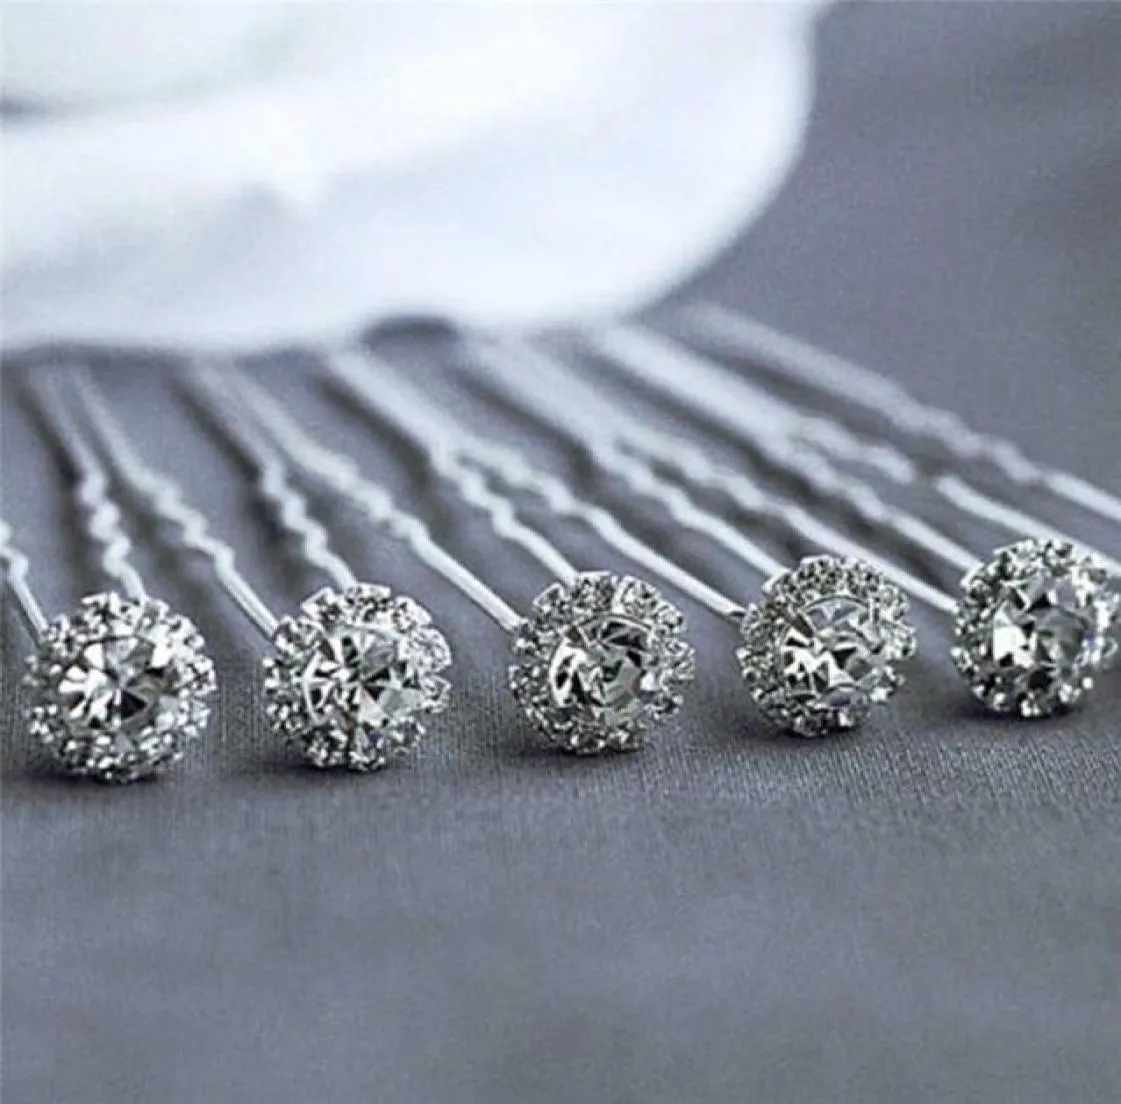 10st Fashion Wedding Bridal Pearl Flower Clear Crystal Rhinestone Hair Pins Clips Bridesmaid Hårkläder smycken Hårtillbehör H06403686